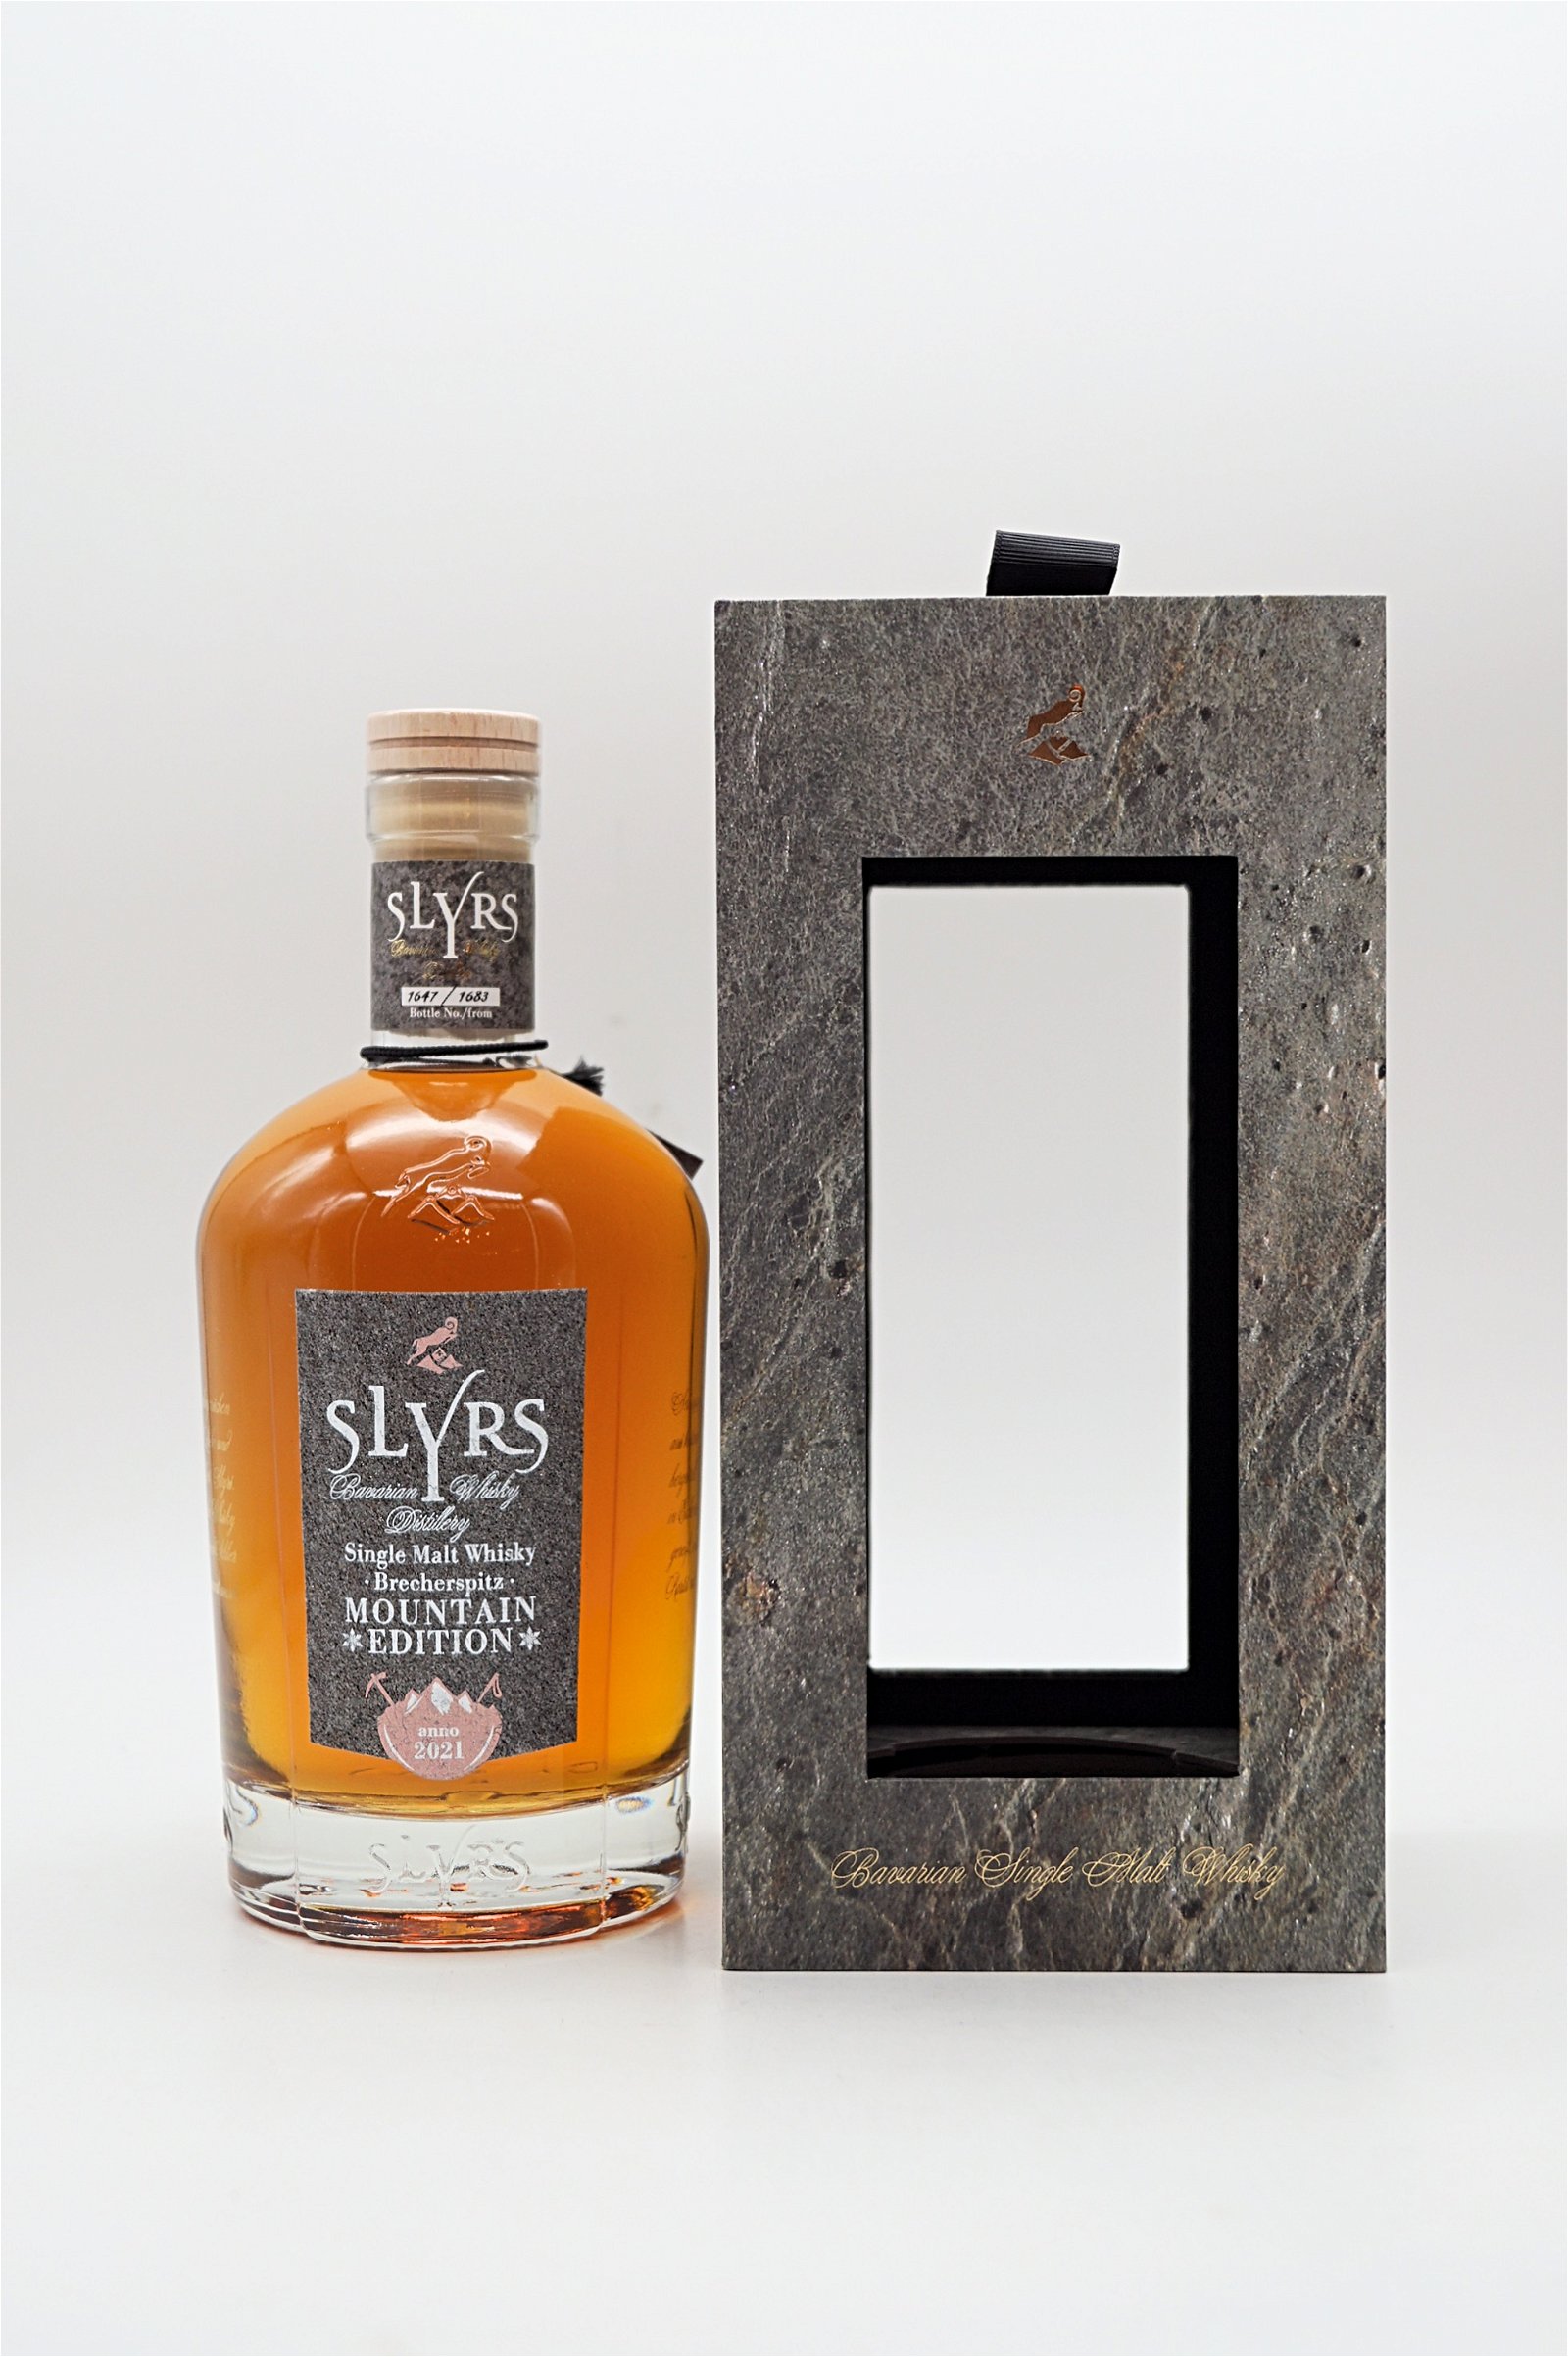 Slyrs Brecherspitz Mountain Edition Single Malt Whisky